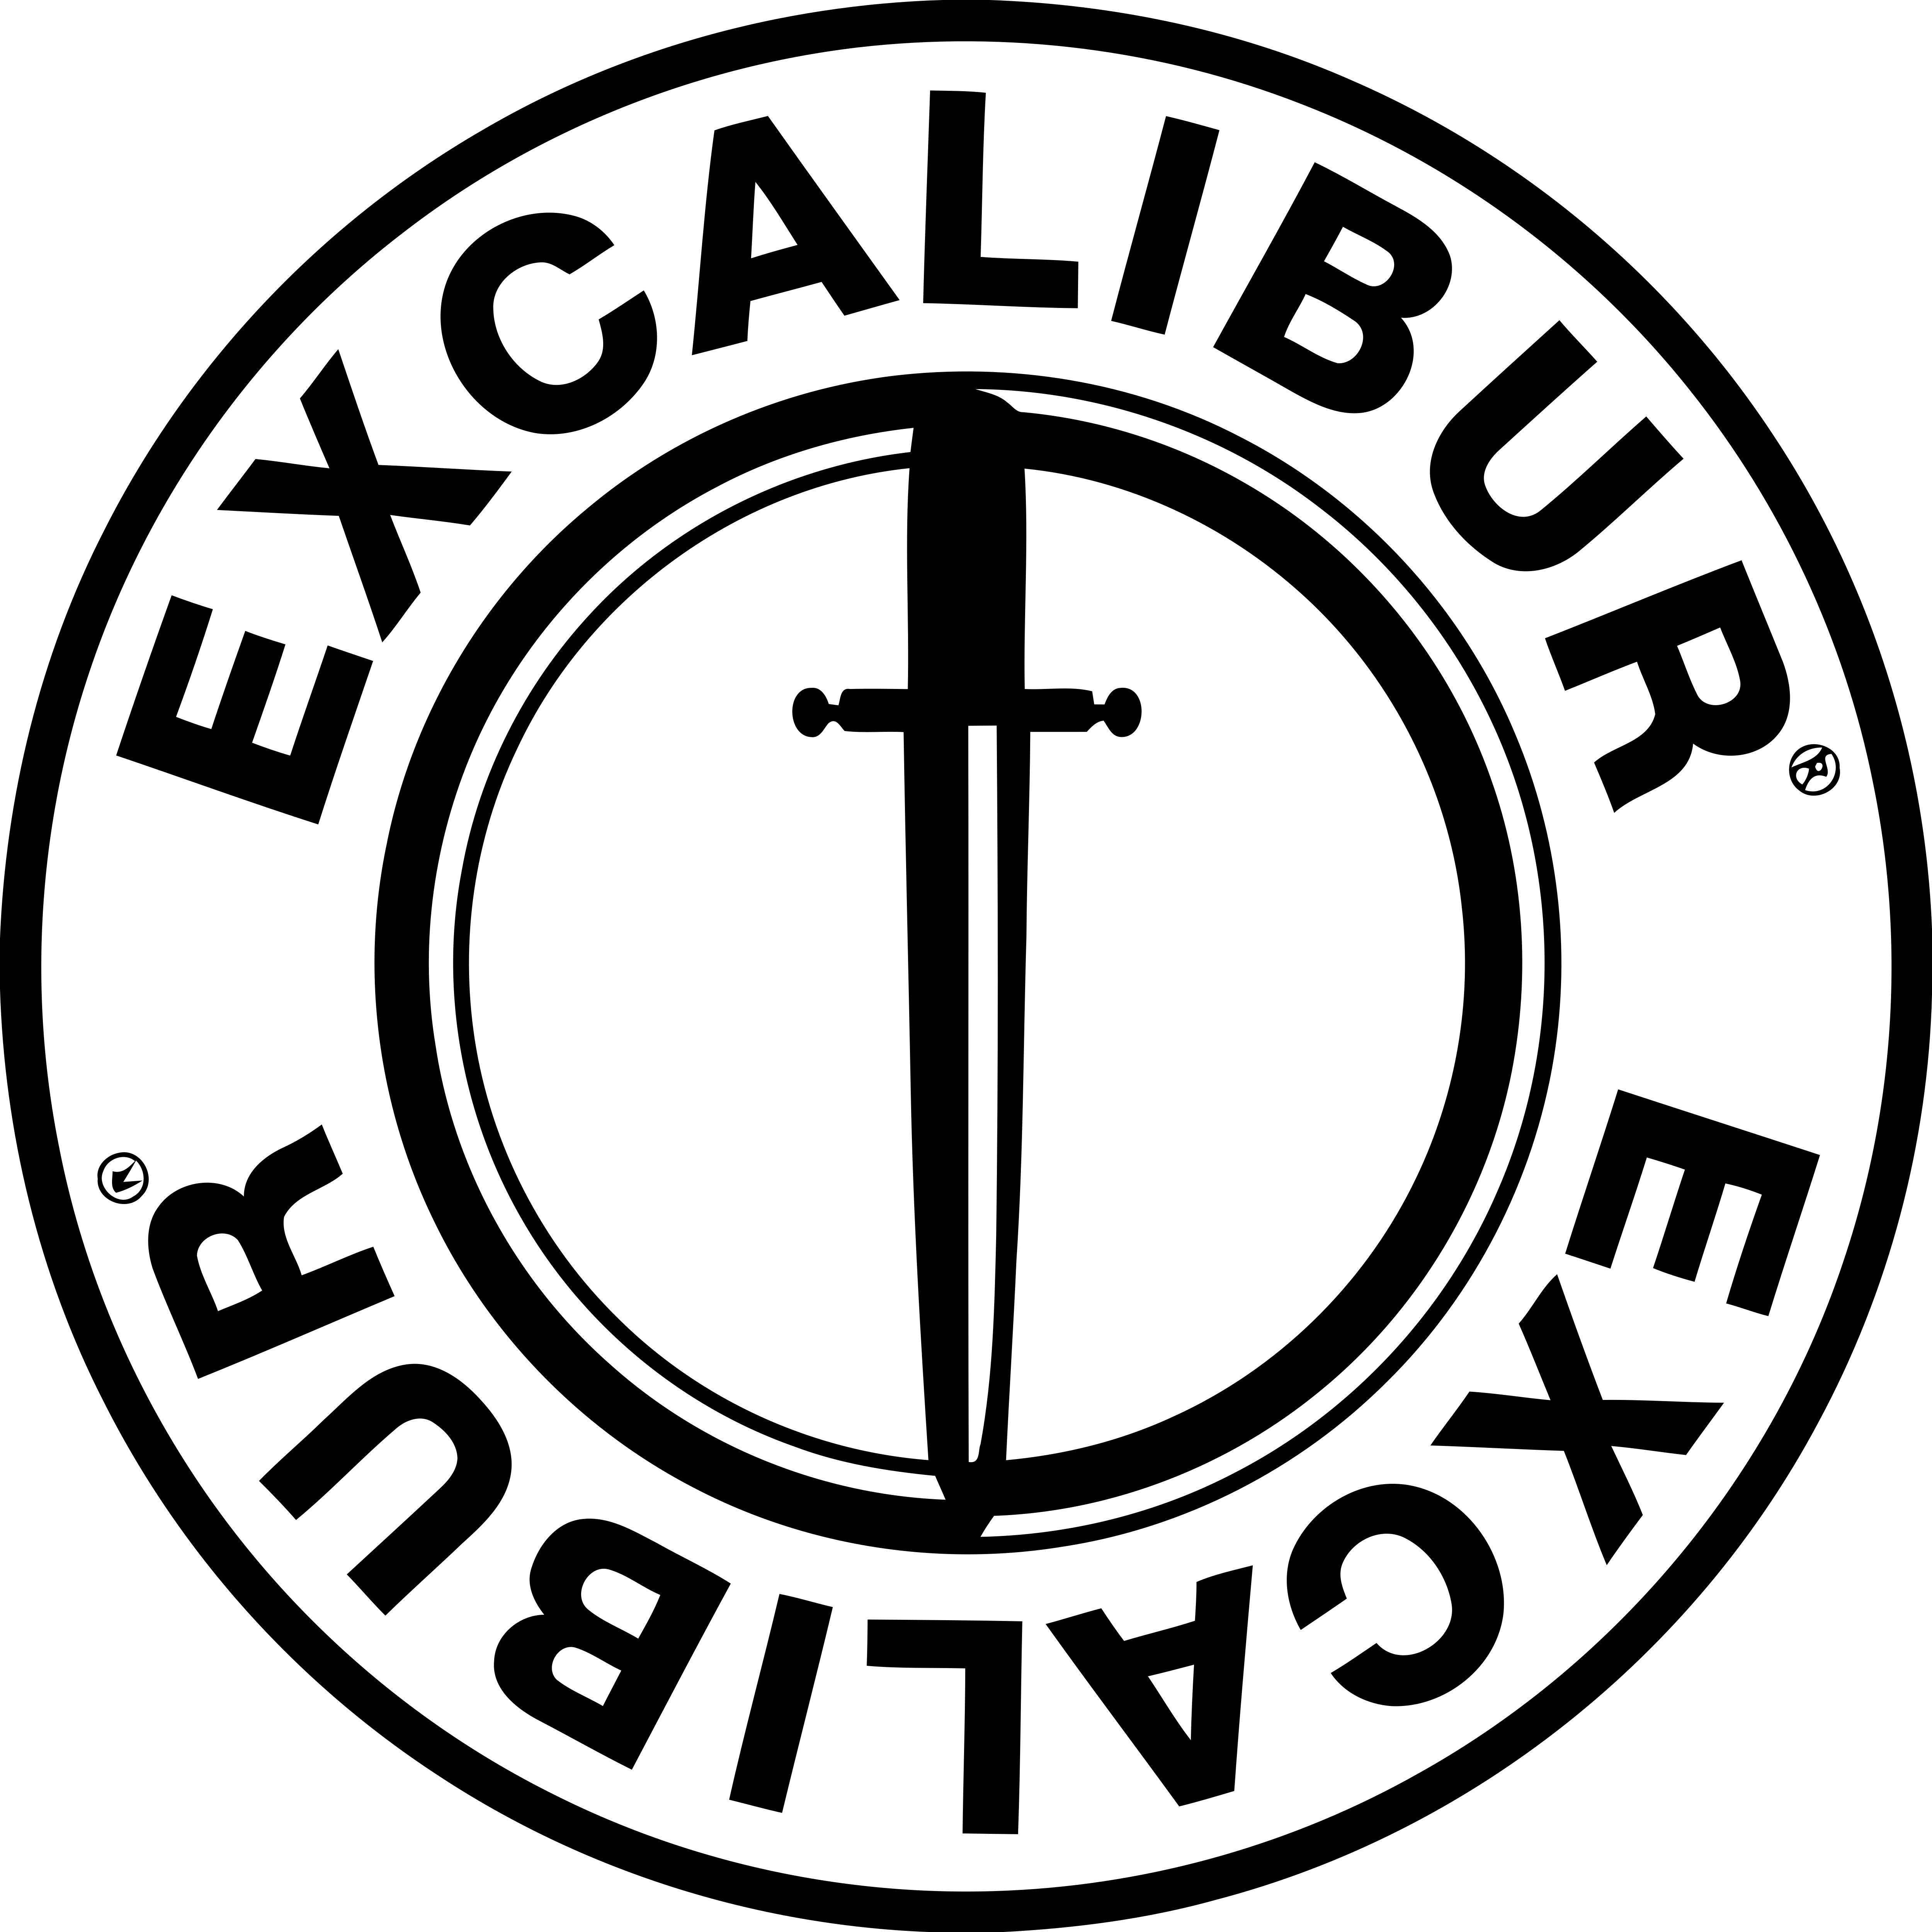 Excalibur Logo - Excalibur – Logos Download